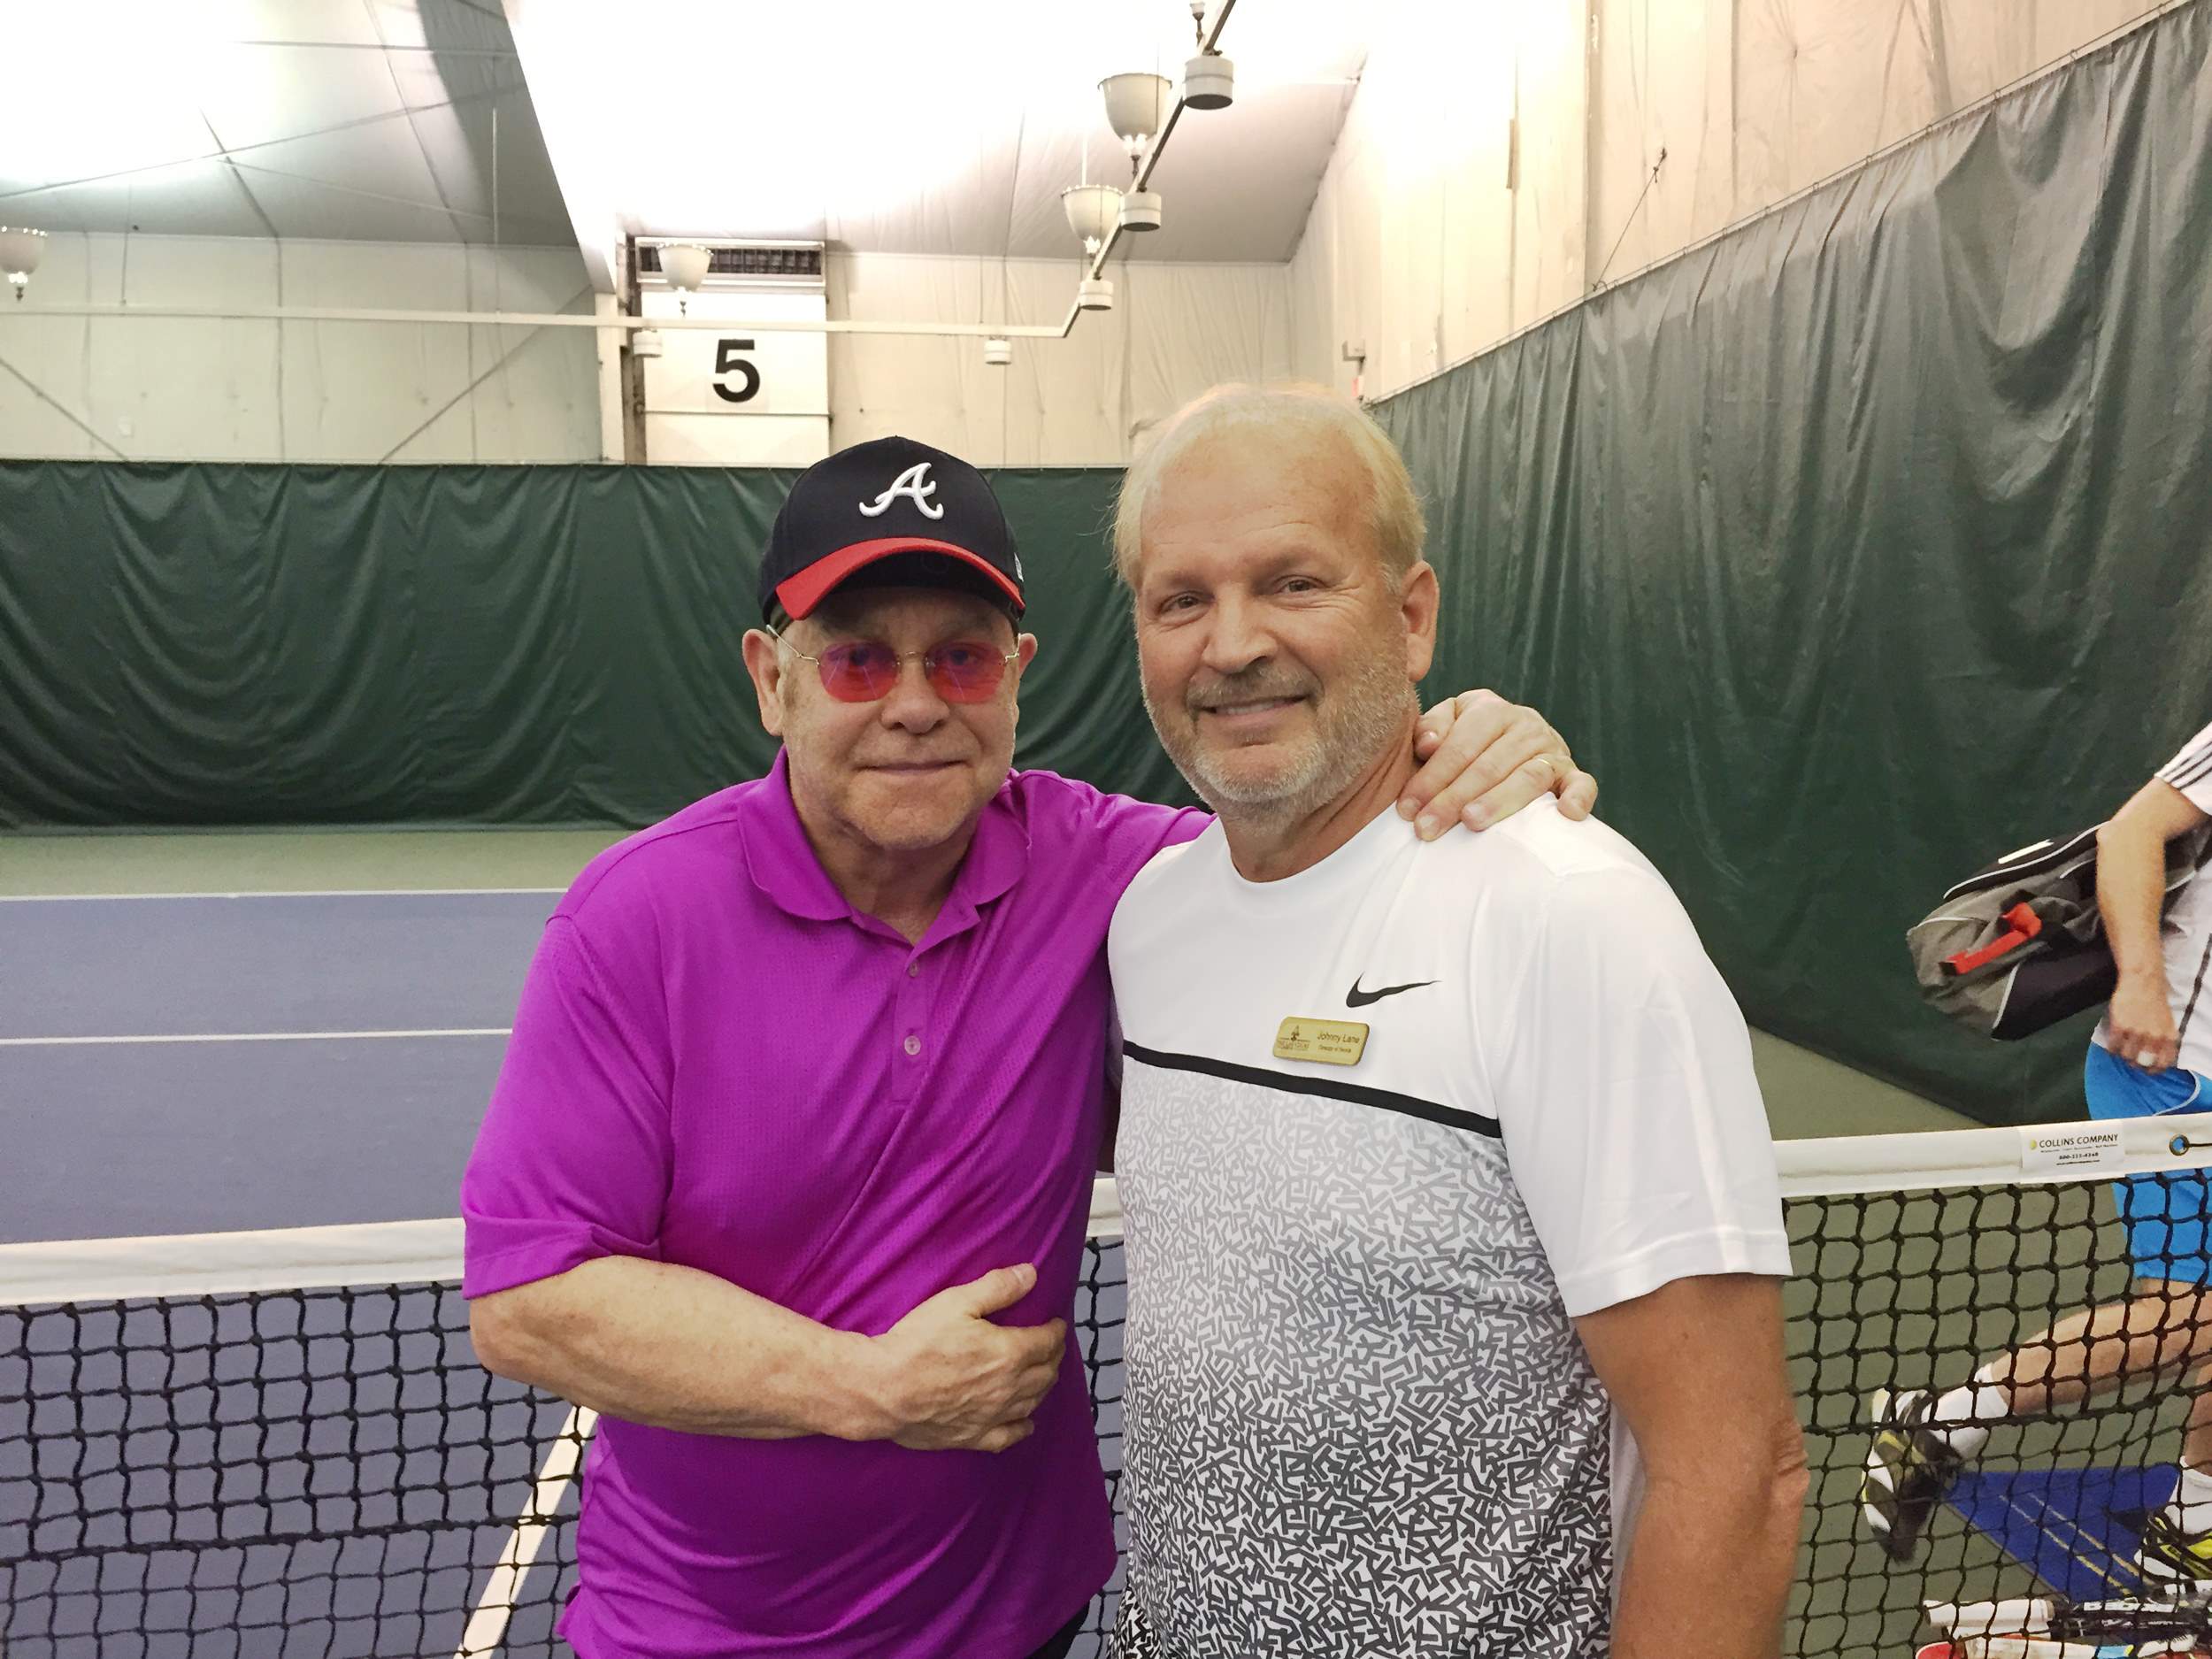 LasVegasCC-Tennis5-Elton-John-and-Johnny